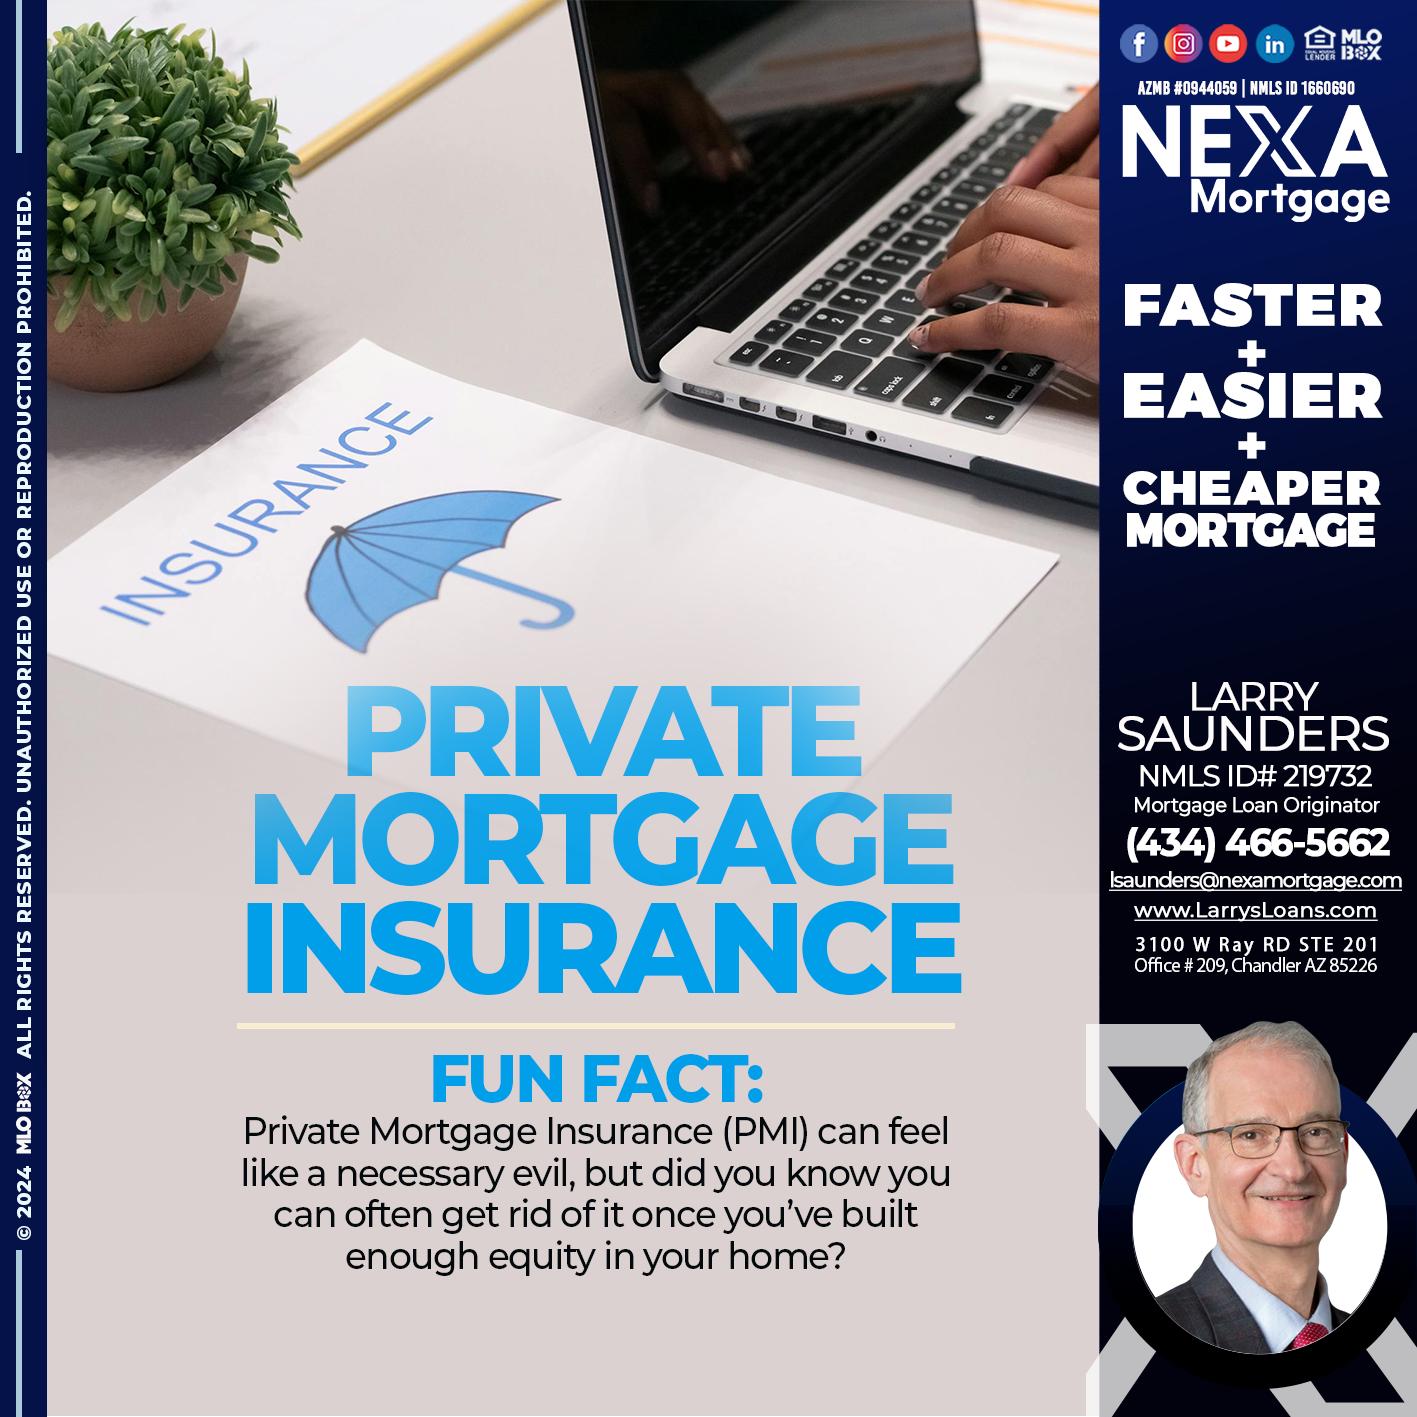 PRIVATE - Larry Saunders -Mortgage Loan Originator